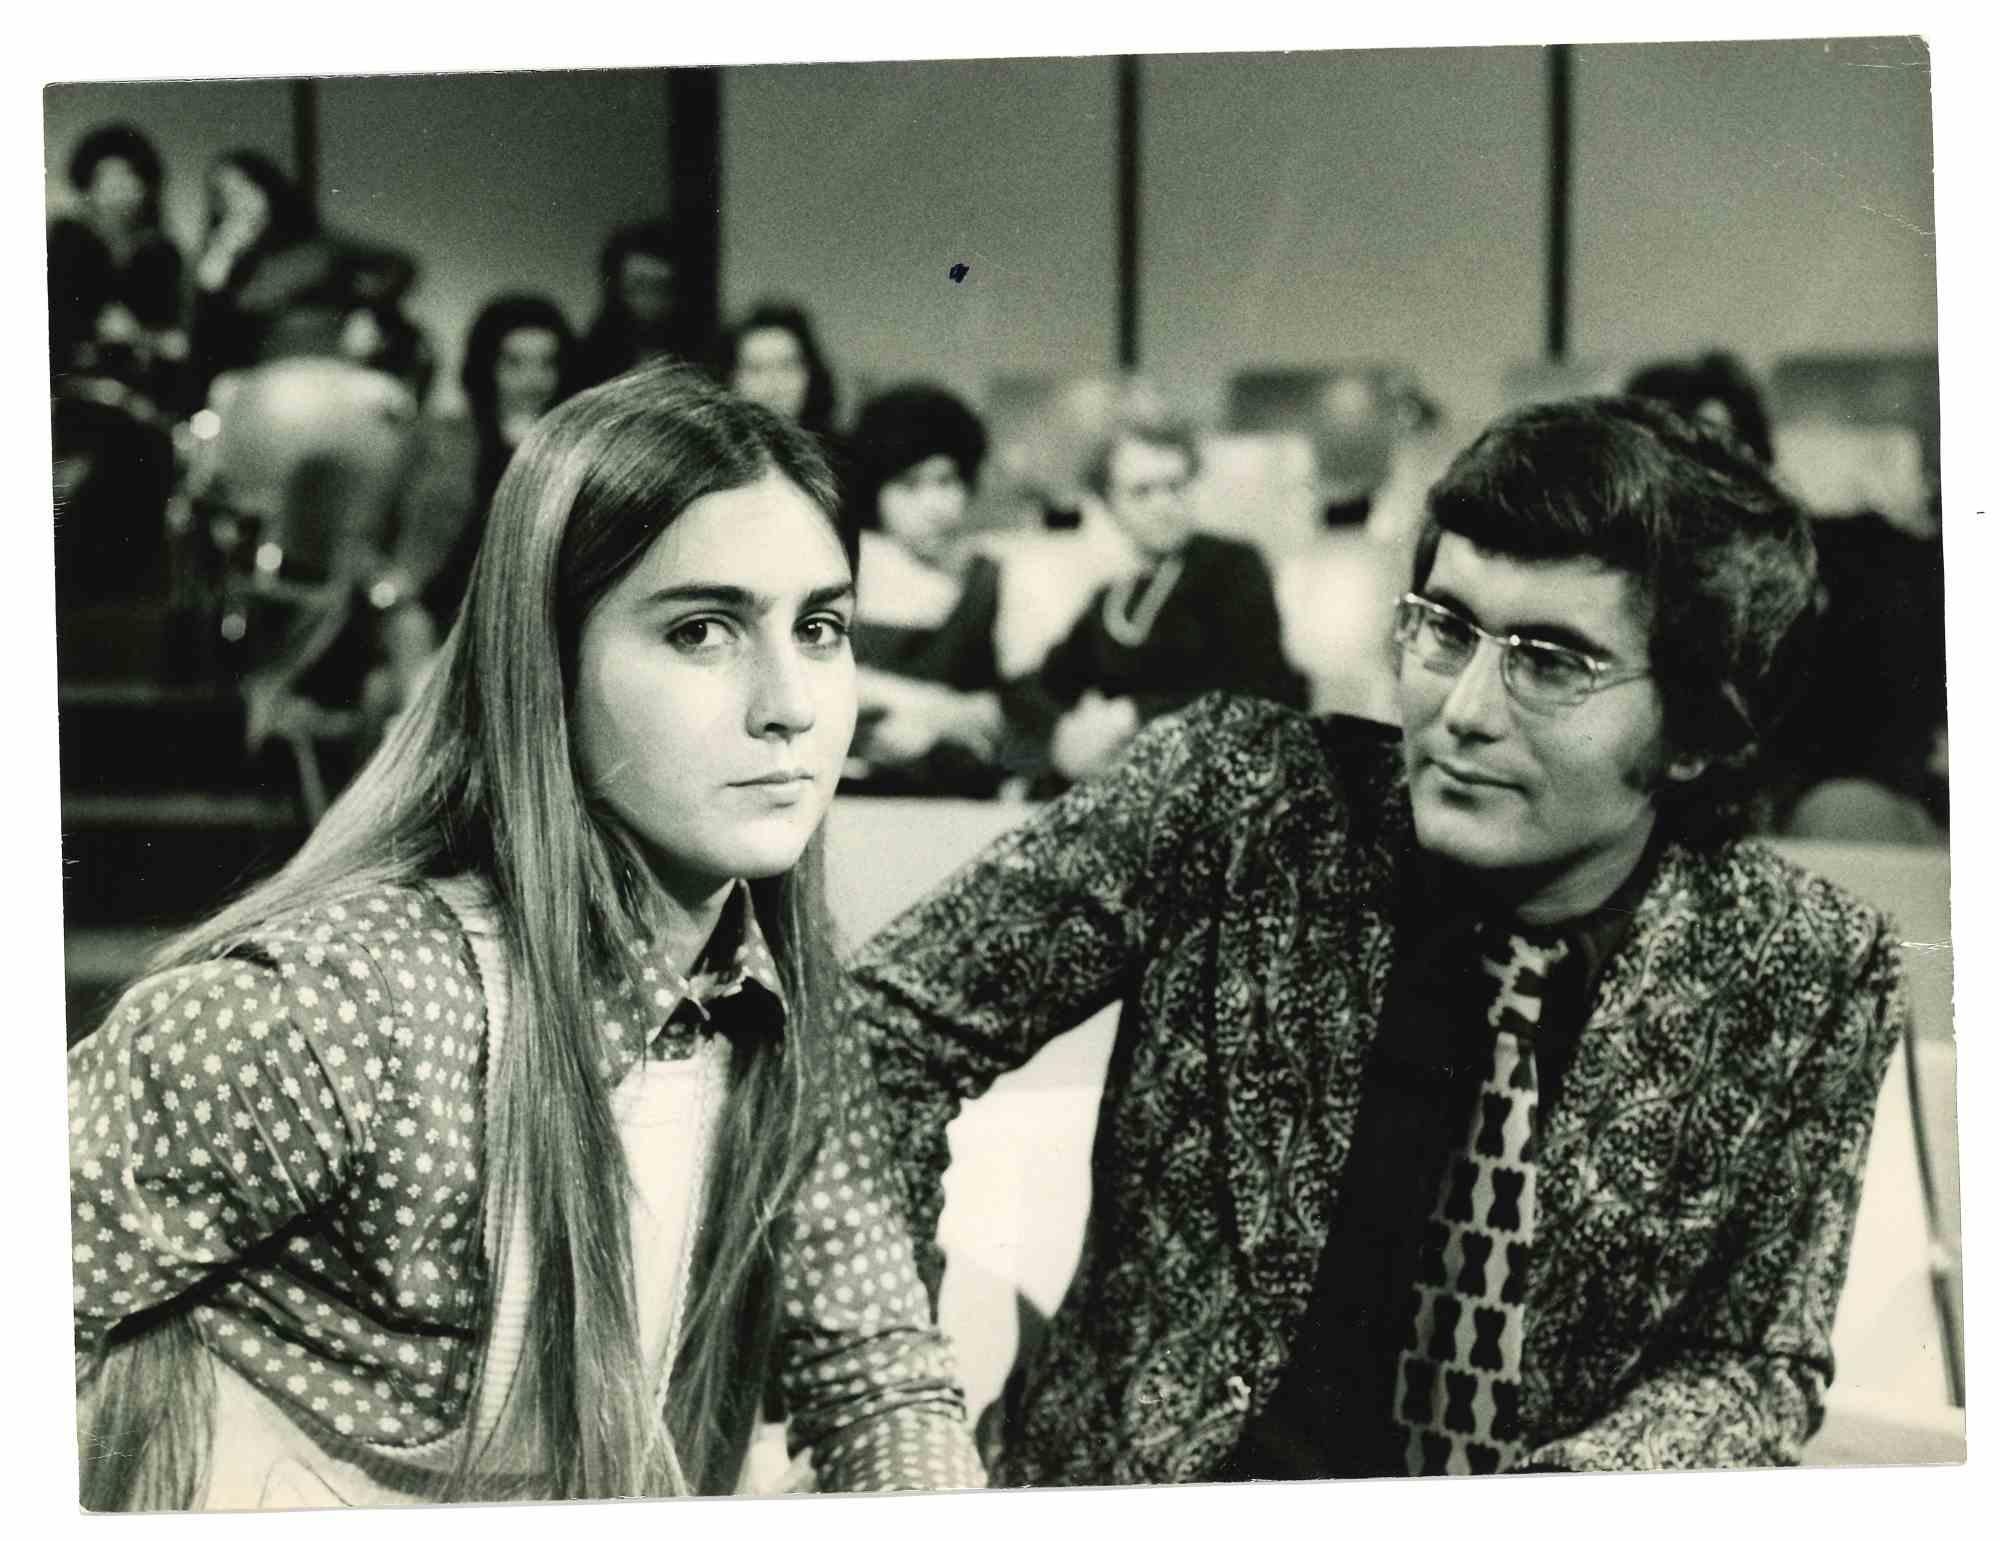 Unknown Portrait Photograph - Al Bano and Romina - Vintage Photograph - 1970s